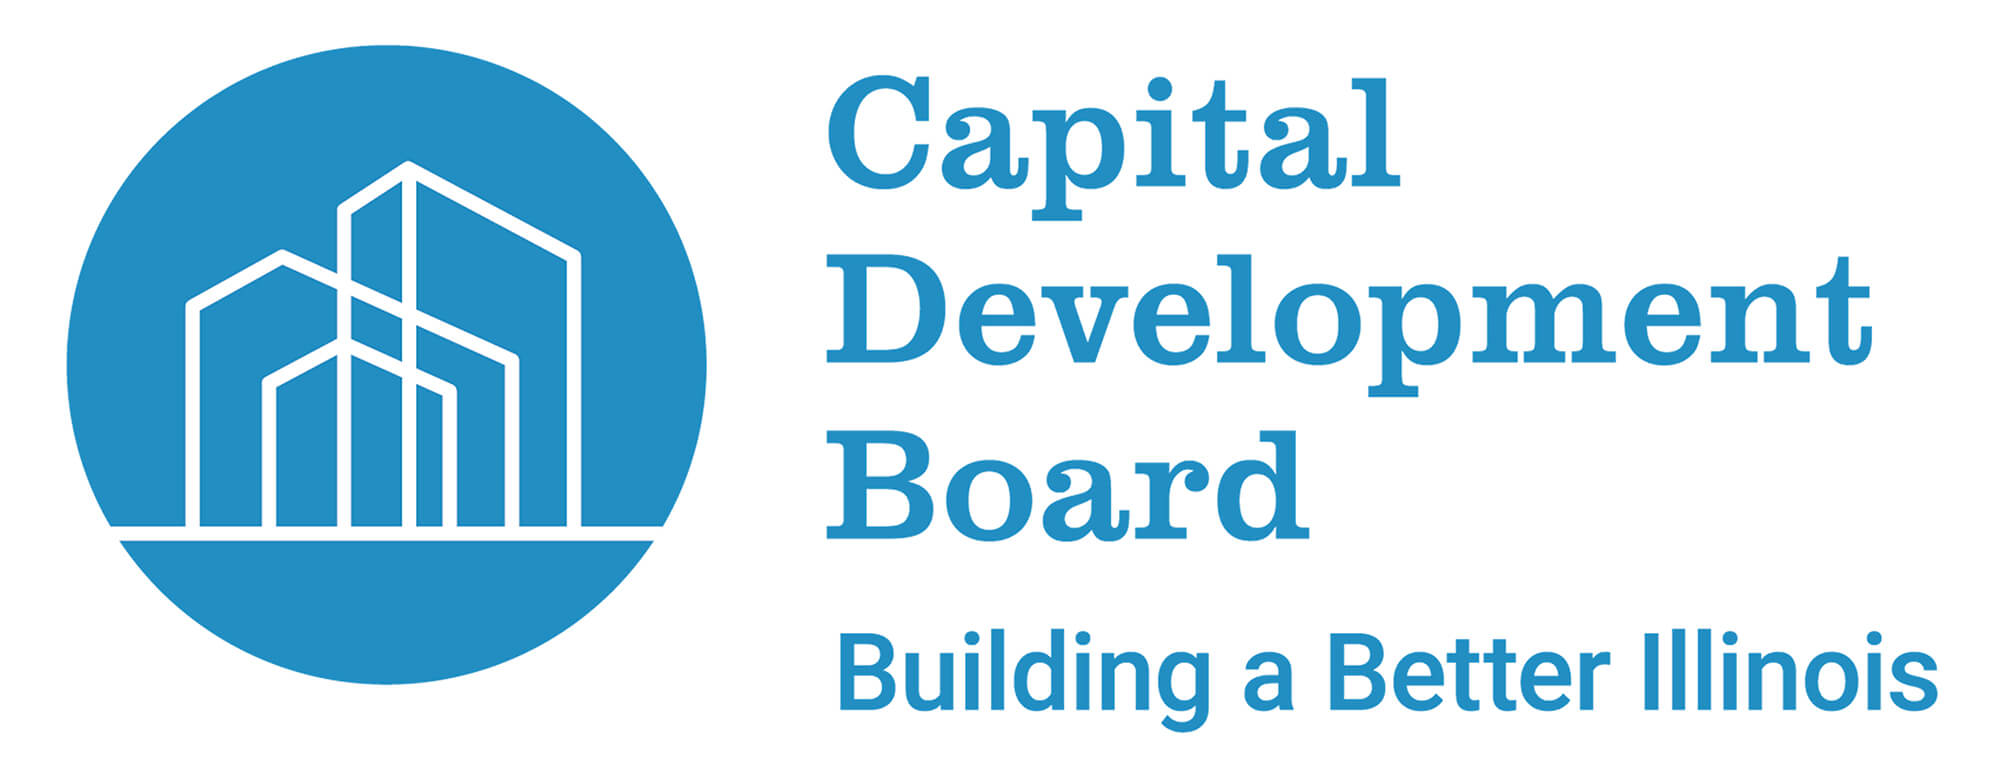 Capital Development Board - Illinois